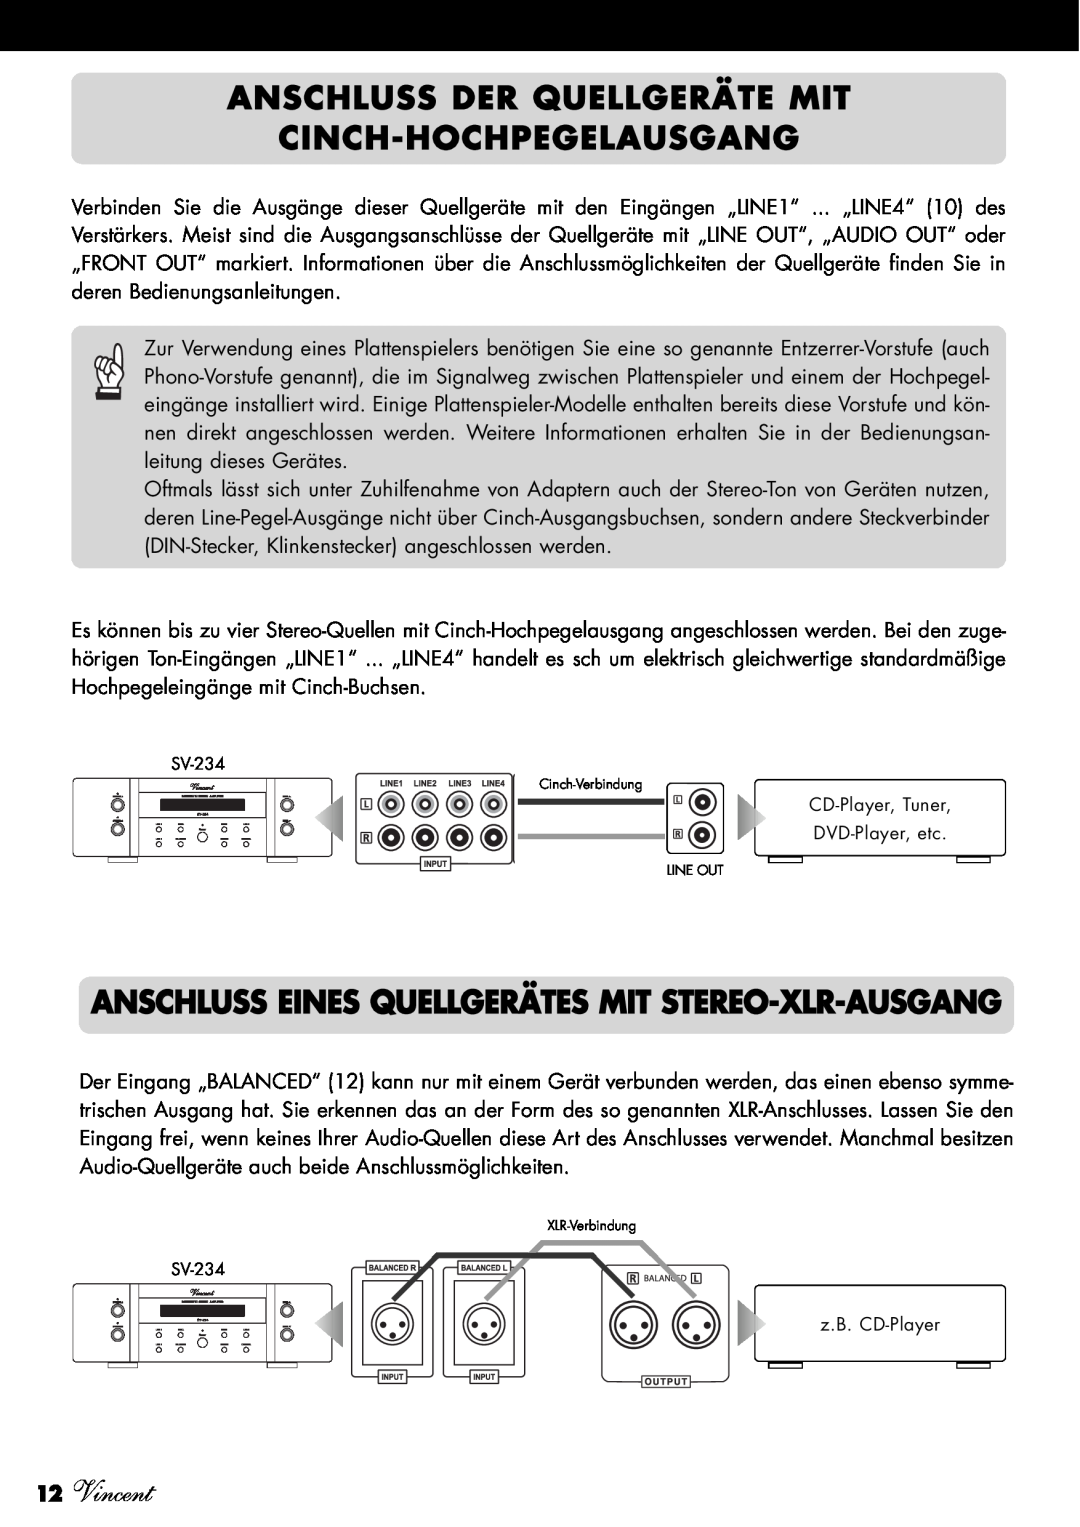 Vincent Audio SV-234 manuel dutilisation Anschluss Der Quellgeräte Mit, Cinch-Hochpegelausgang, 12Vincent 